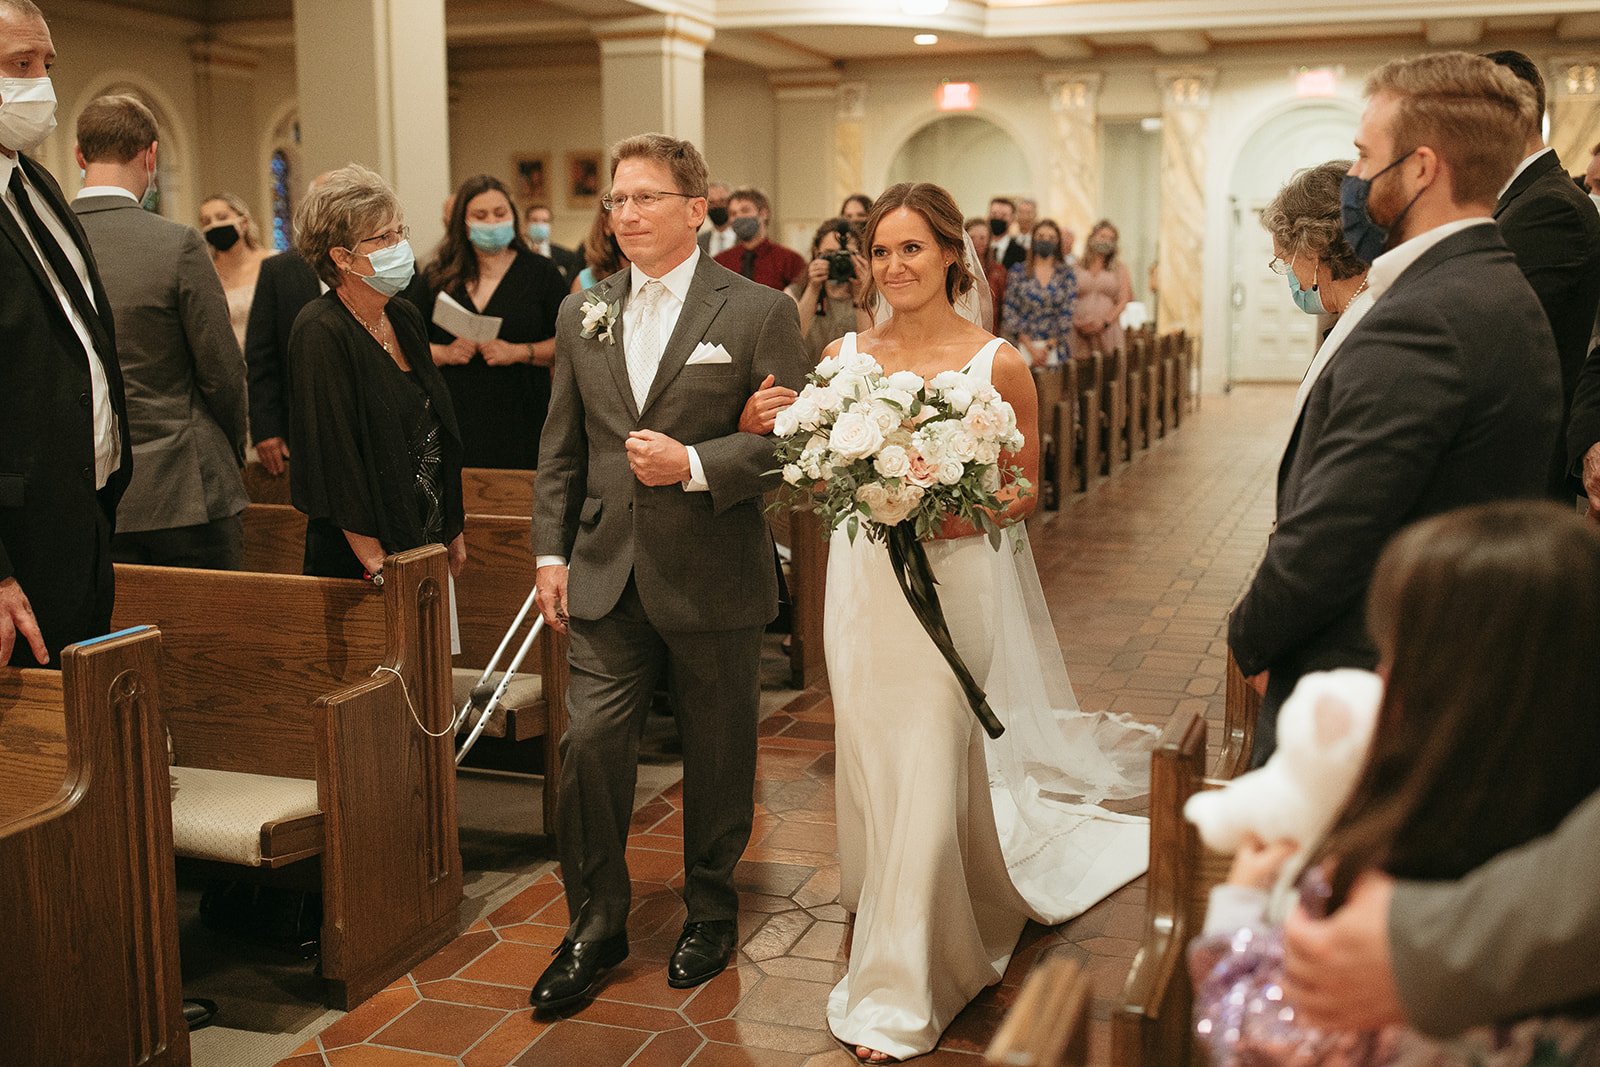 A Fun Intimate Wedding Day In Illinois With Elegant Wedding Decor